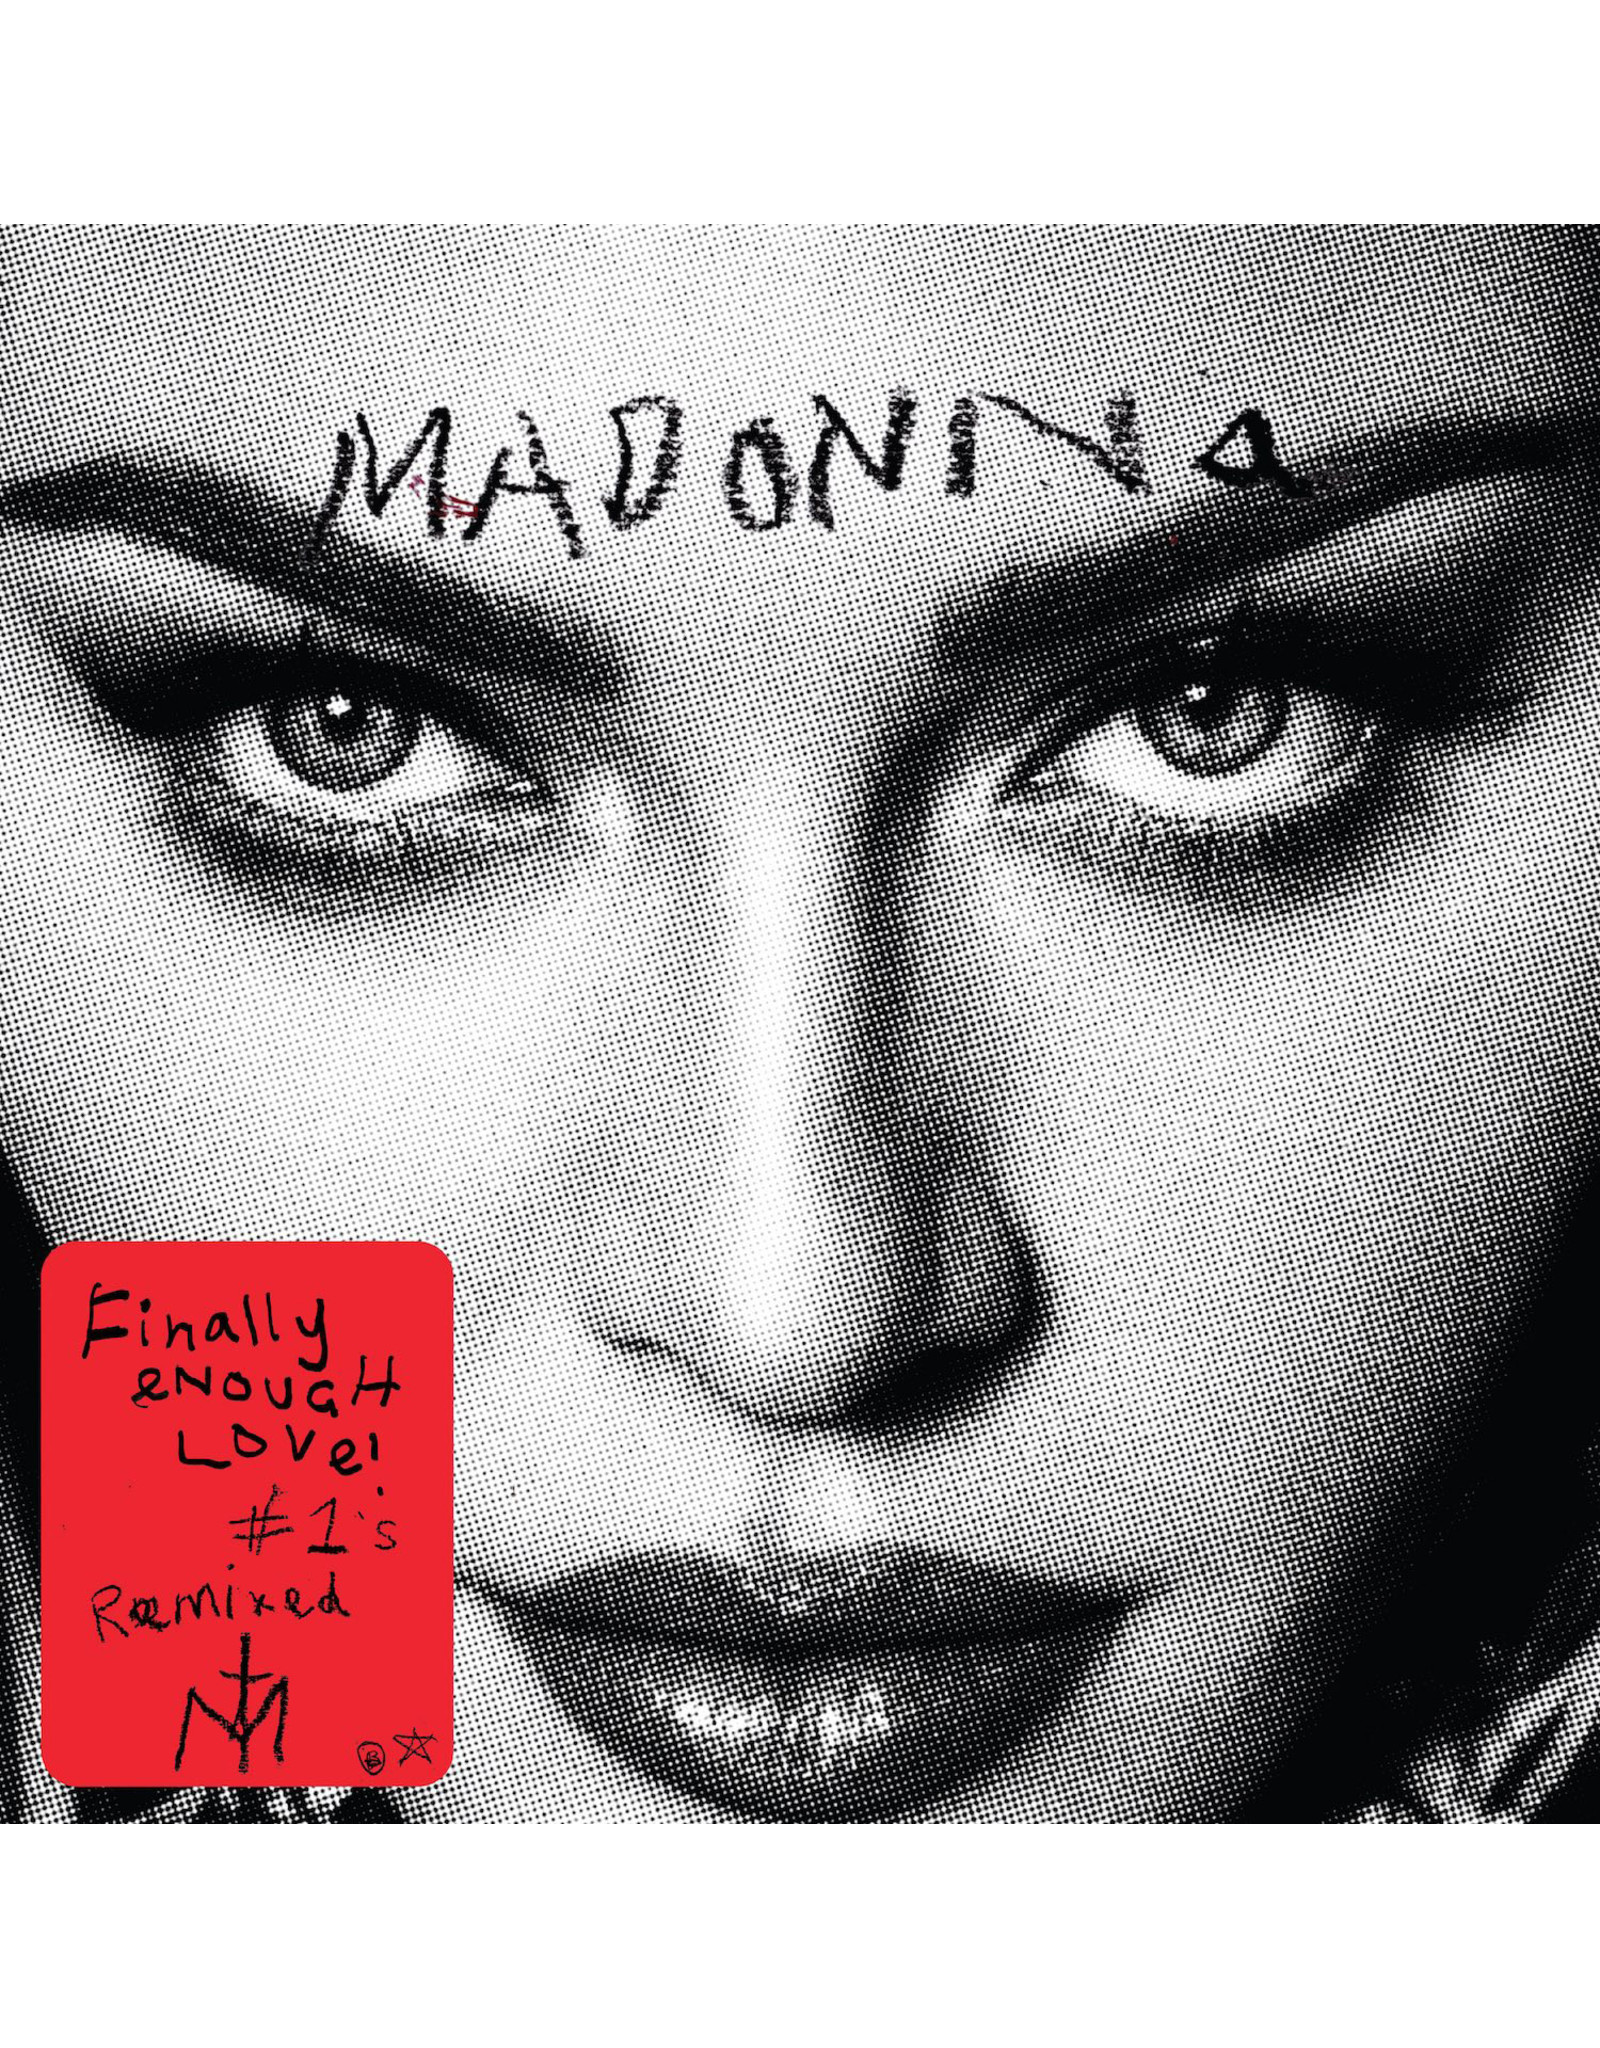 Madonna - Finally Enough Love (Exclusive Clear Vinyl)